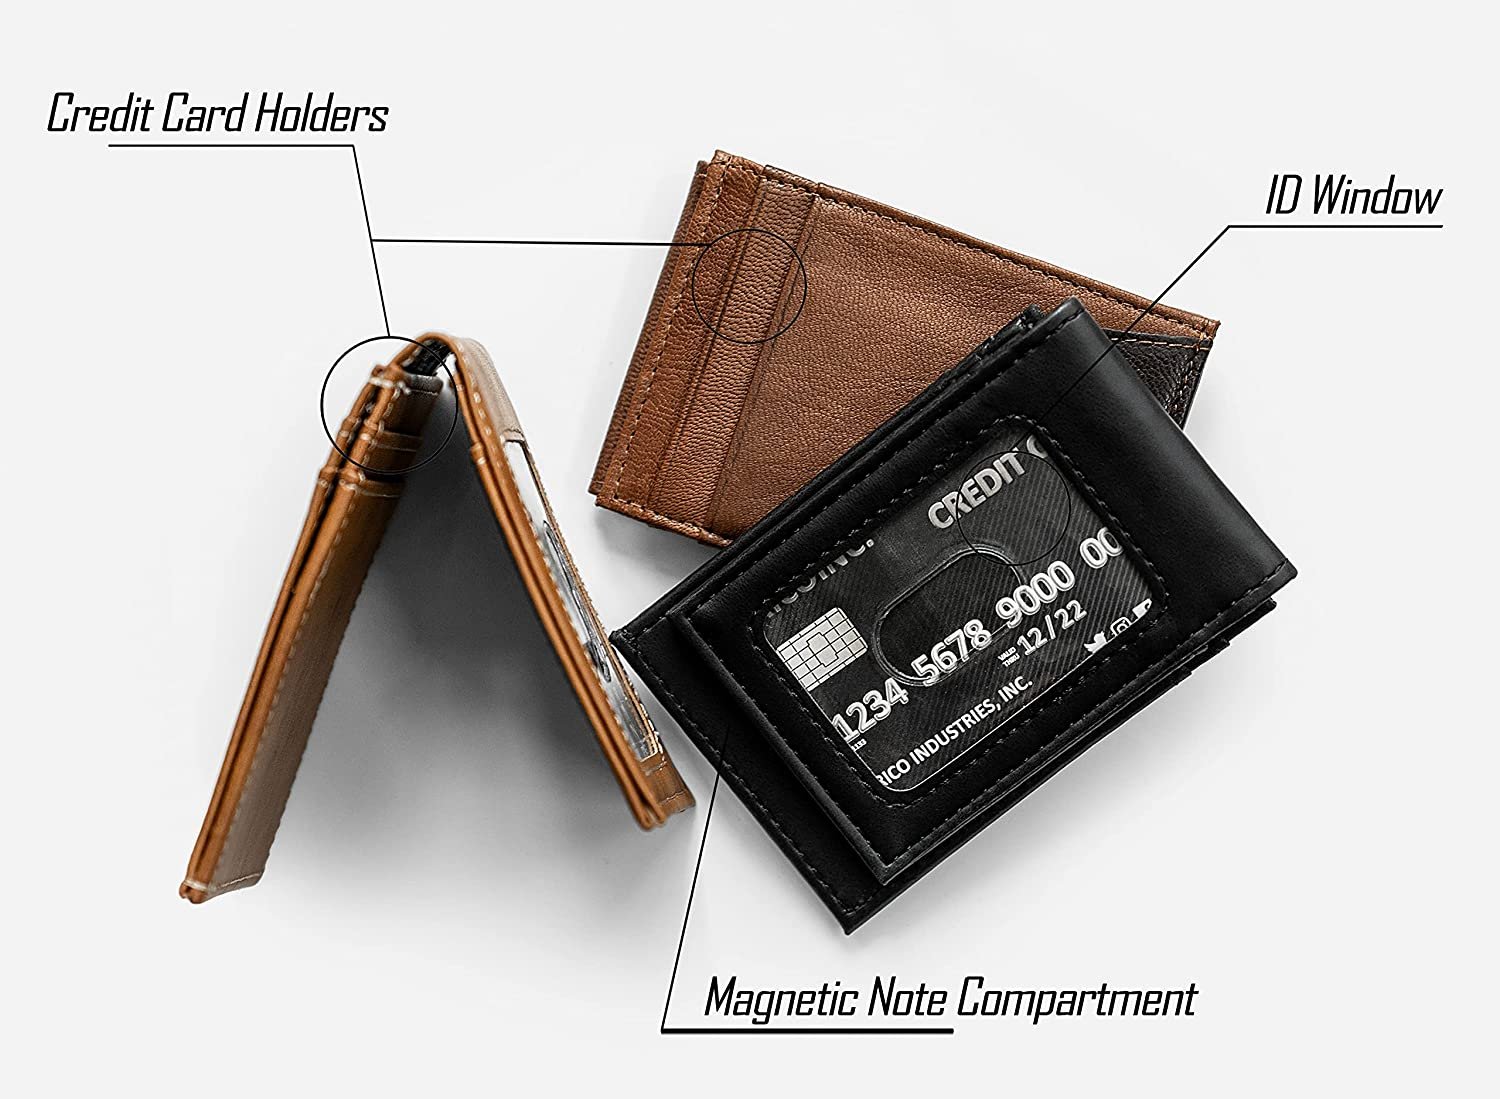 Sacramento Kings Premium Brown Leather Wallet, Front Pocket Magnetic Money Clip, Laser Engraved, Vegan